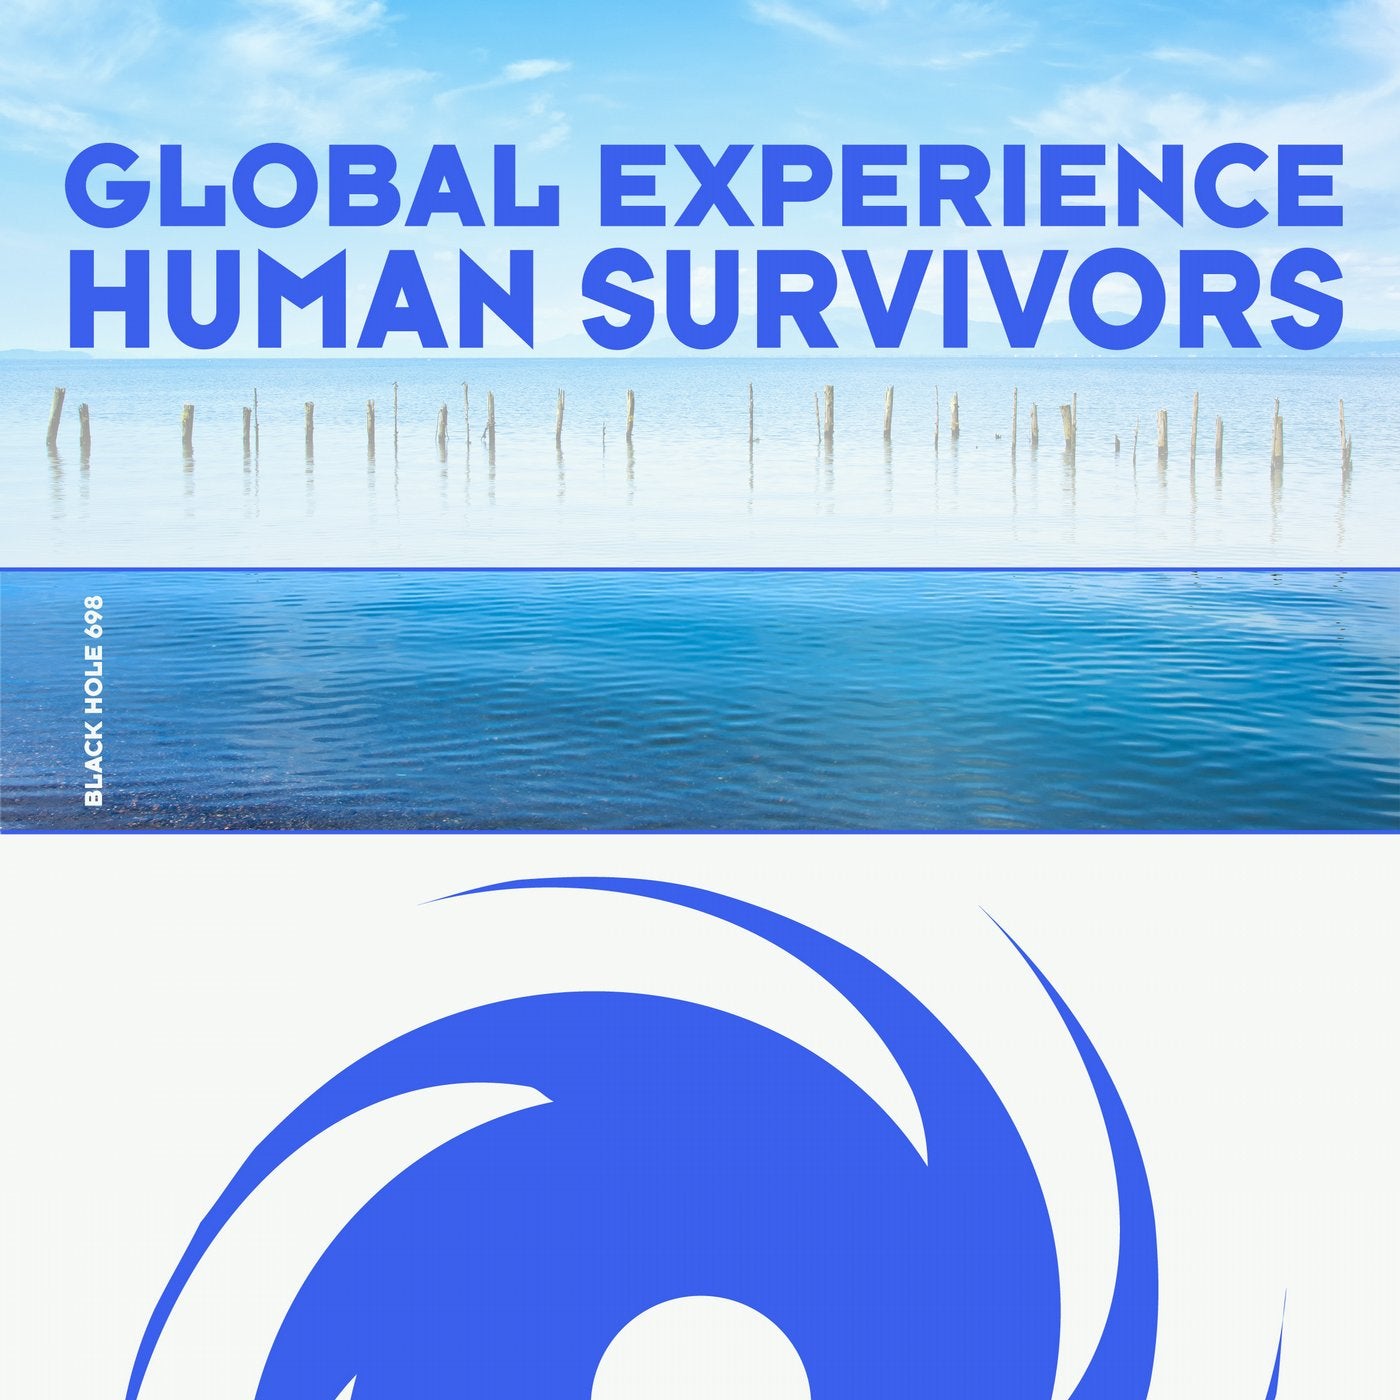 Human Survivors